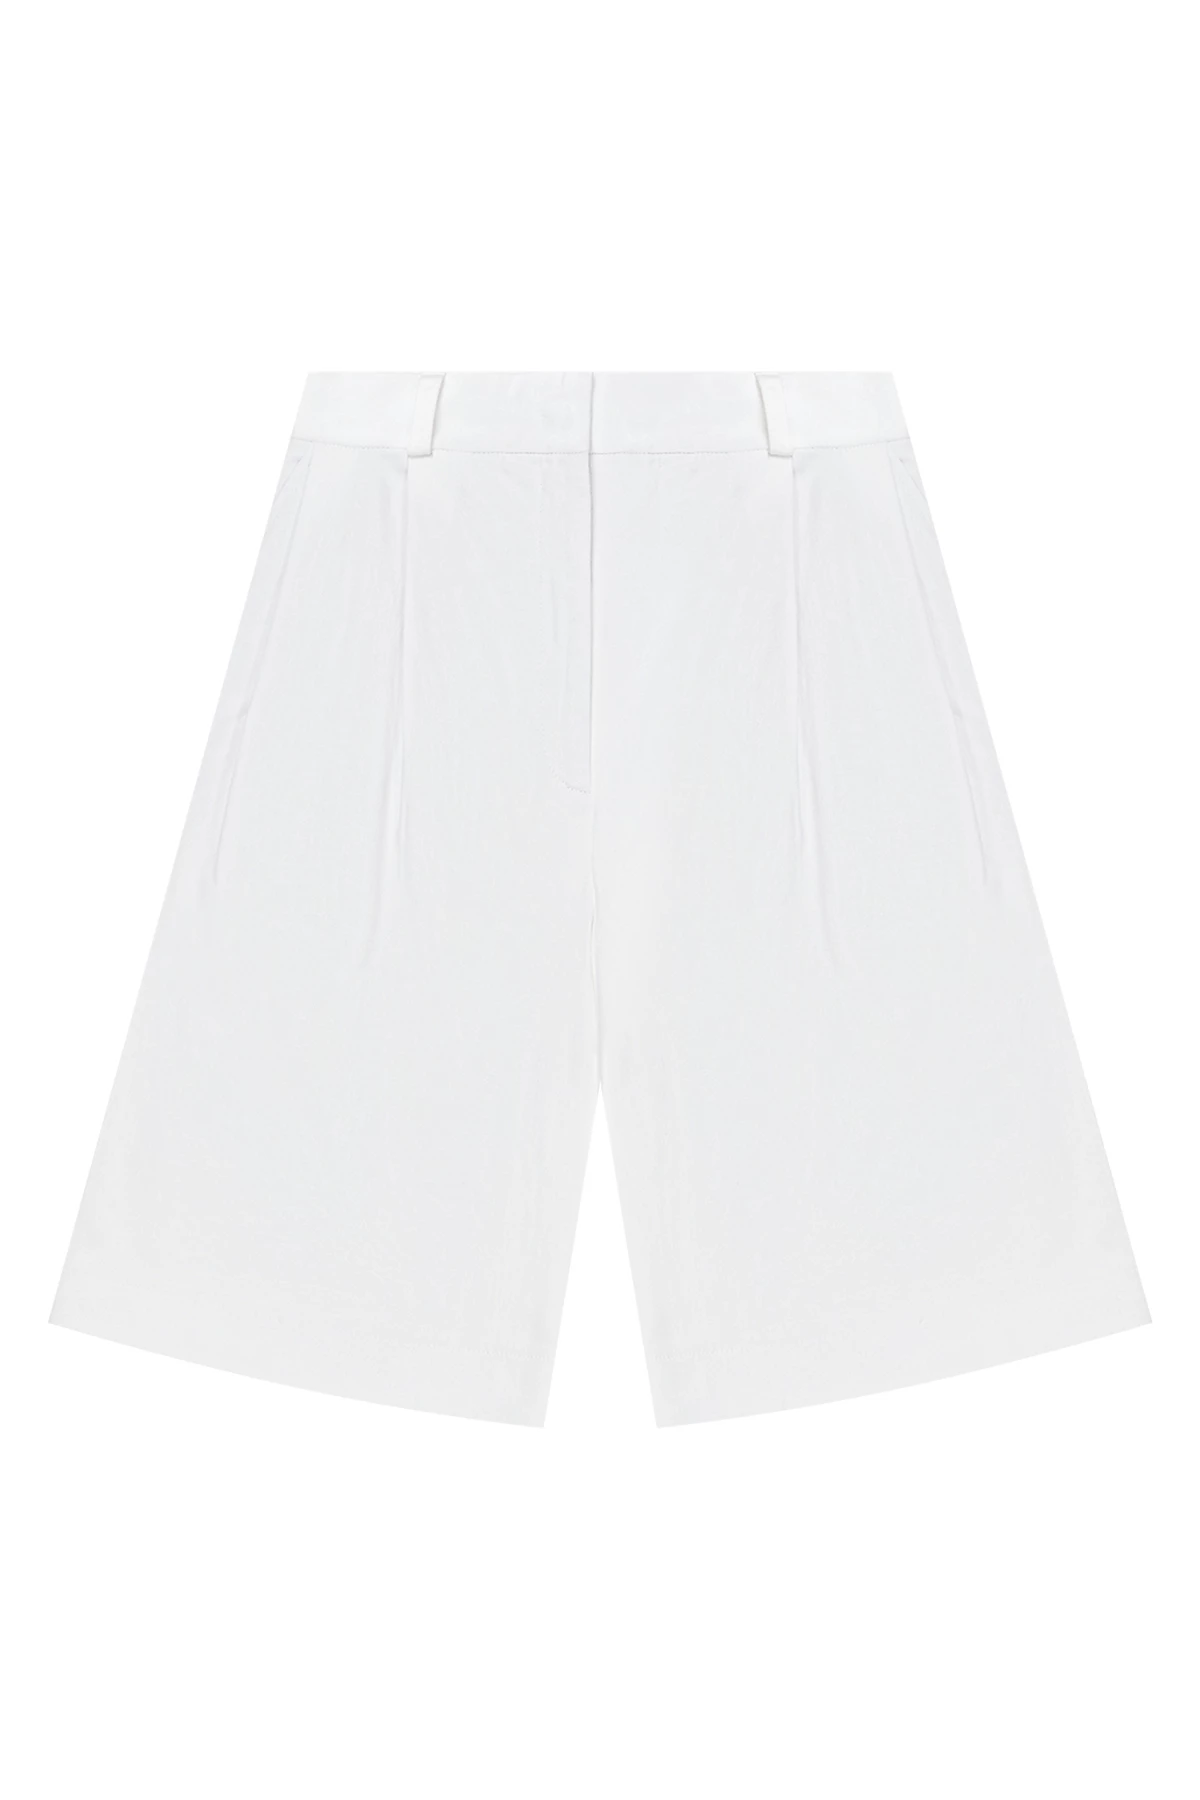 White elongated cotton shorts, photo 5